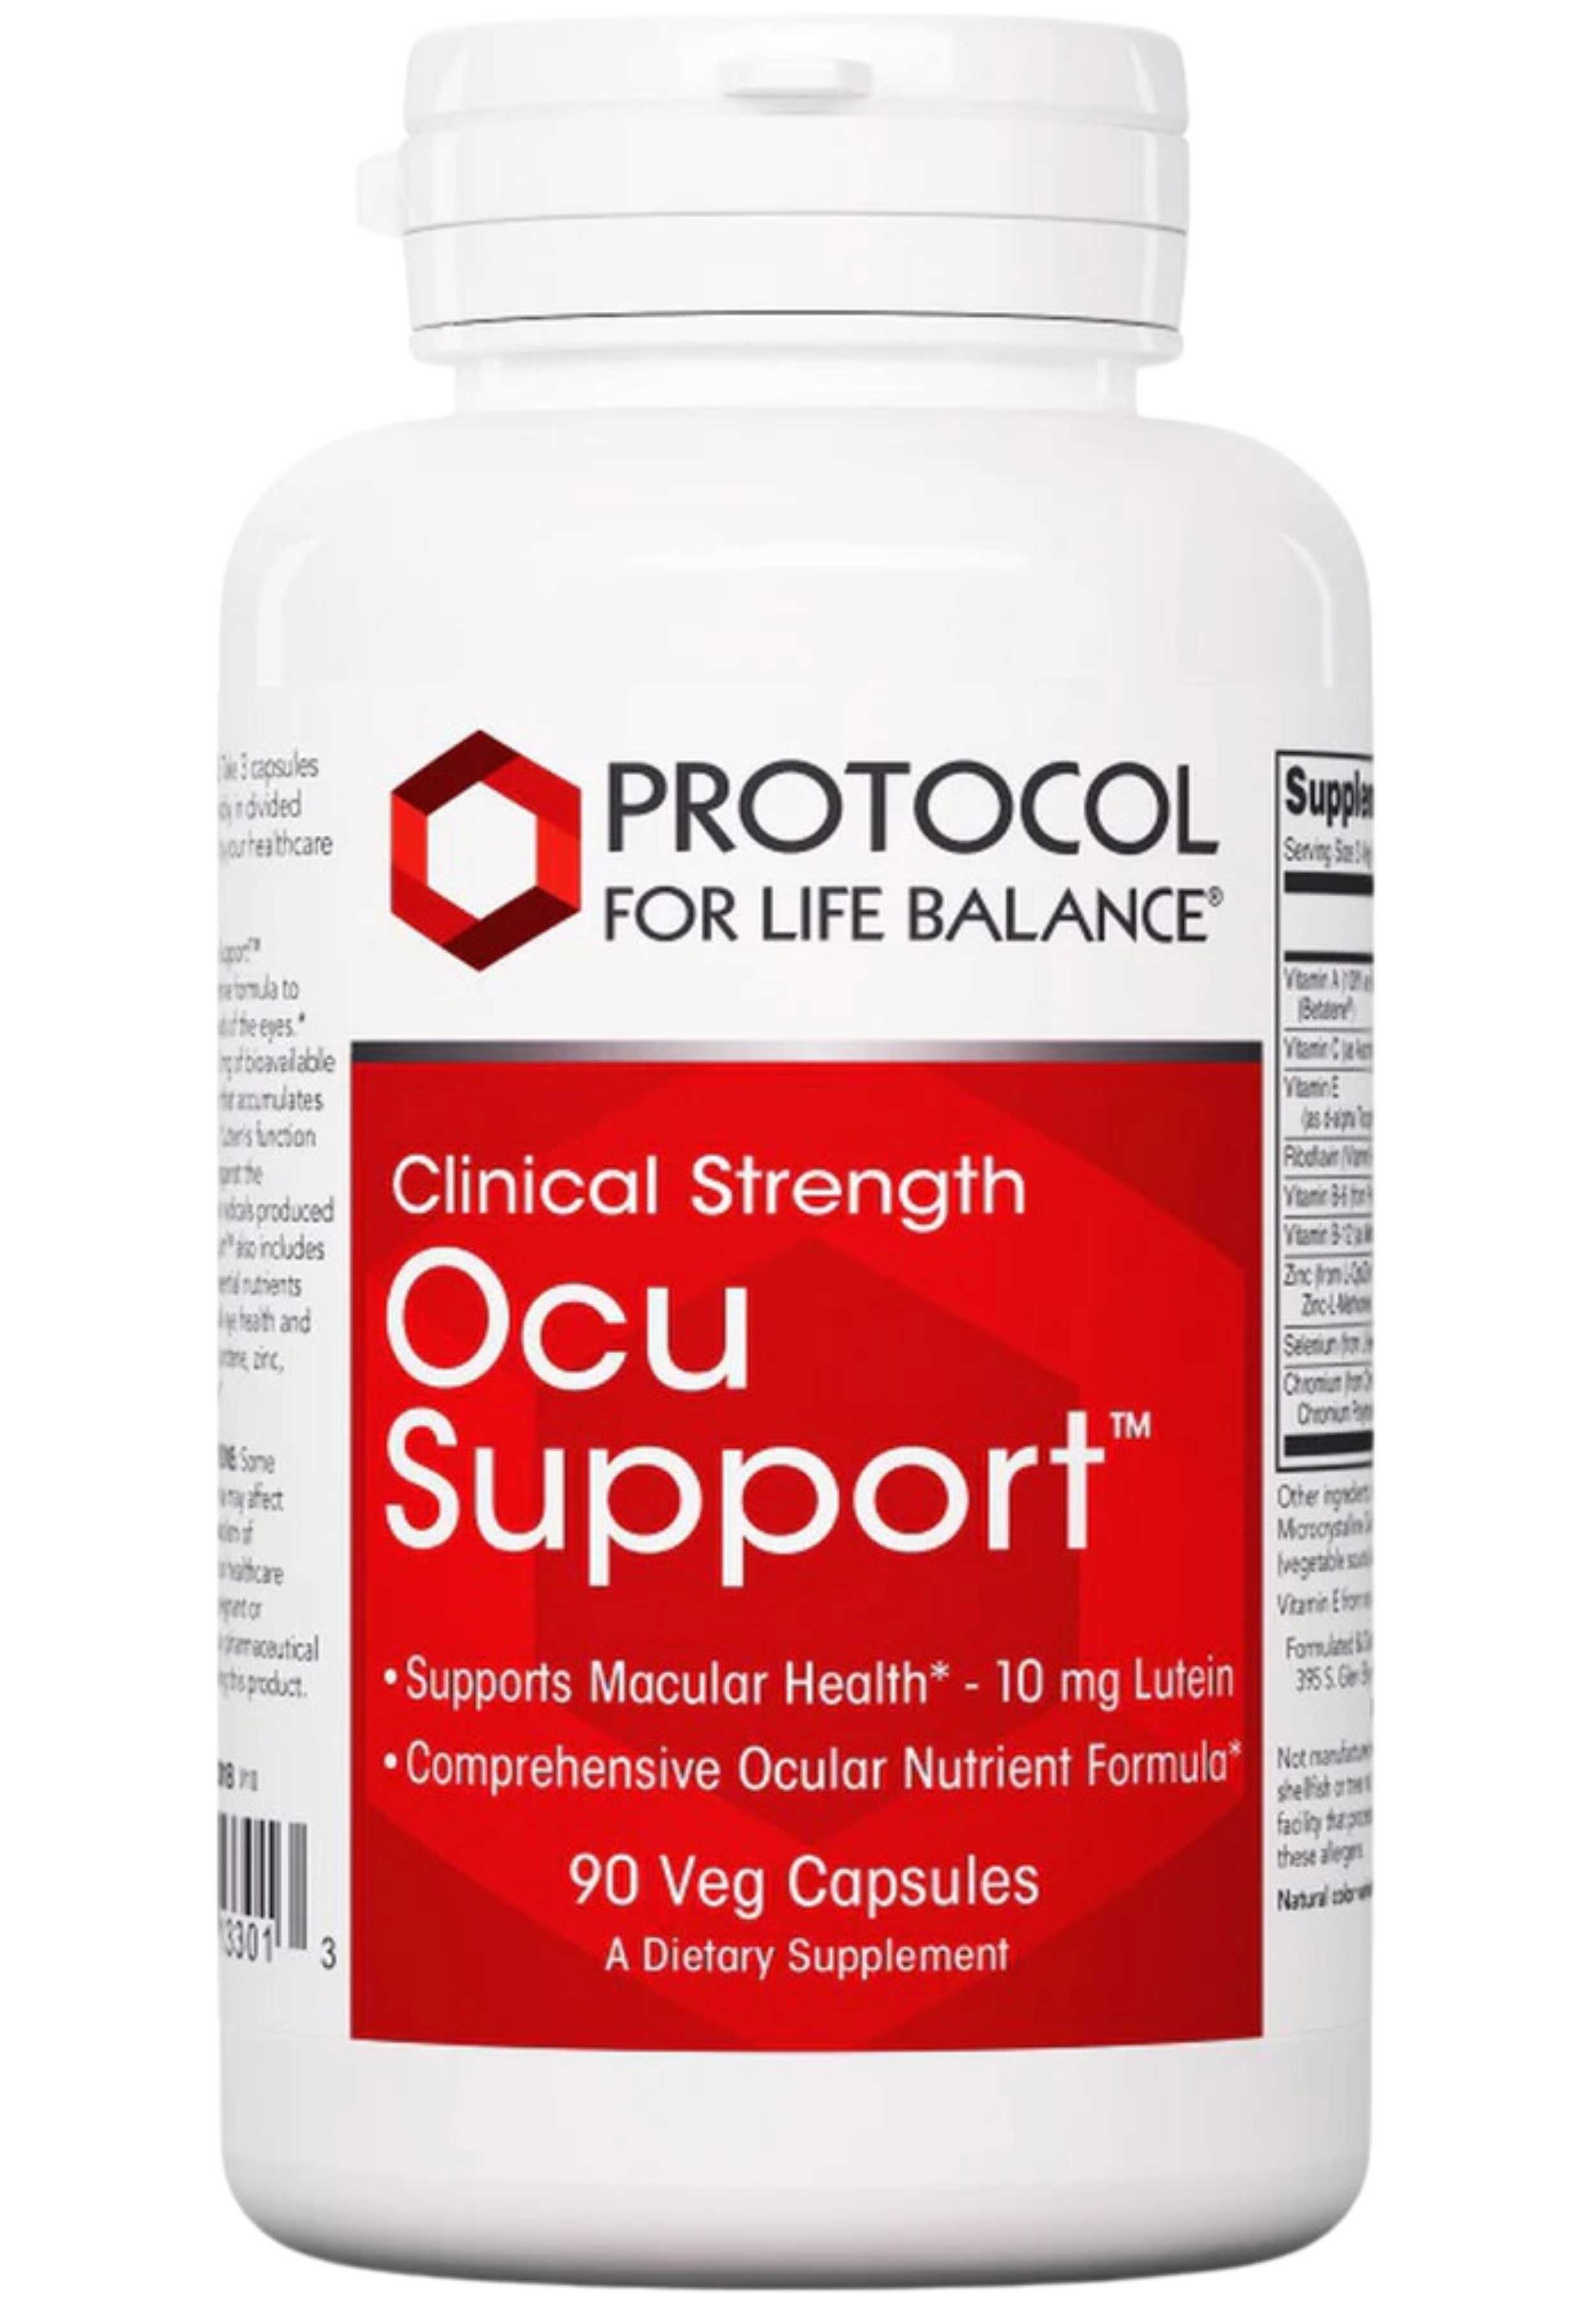 Protocol for Life Balance Ocu Support